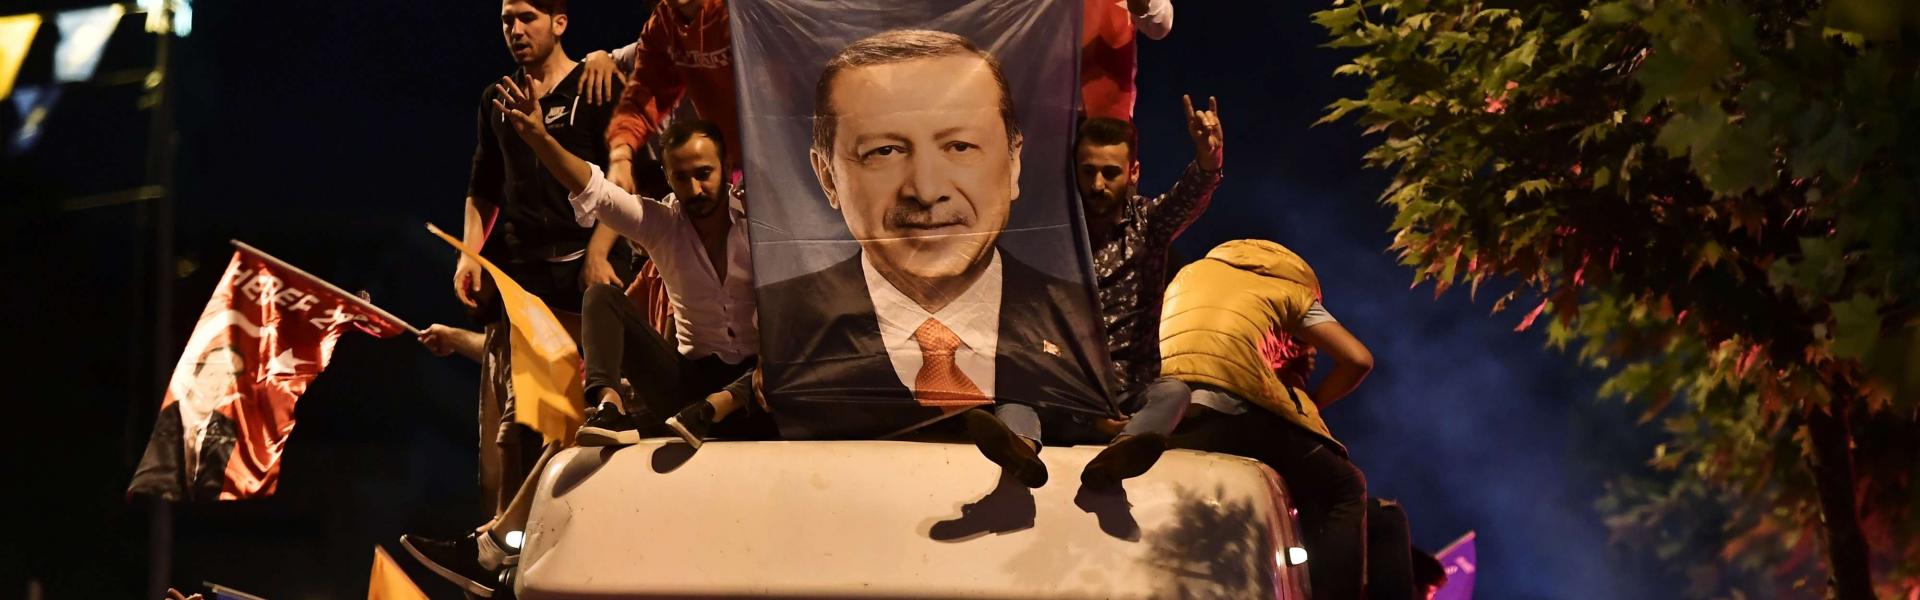 Turkey among increasing autocracies masquerading as democracies - analyst 100